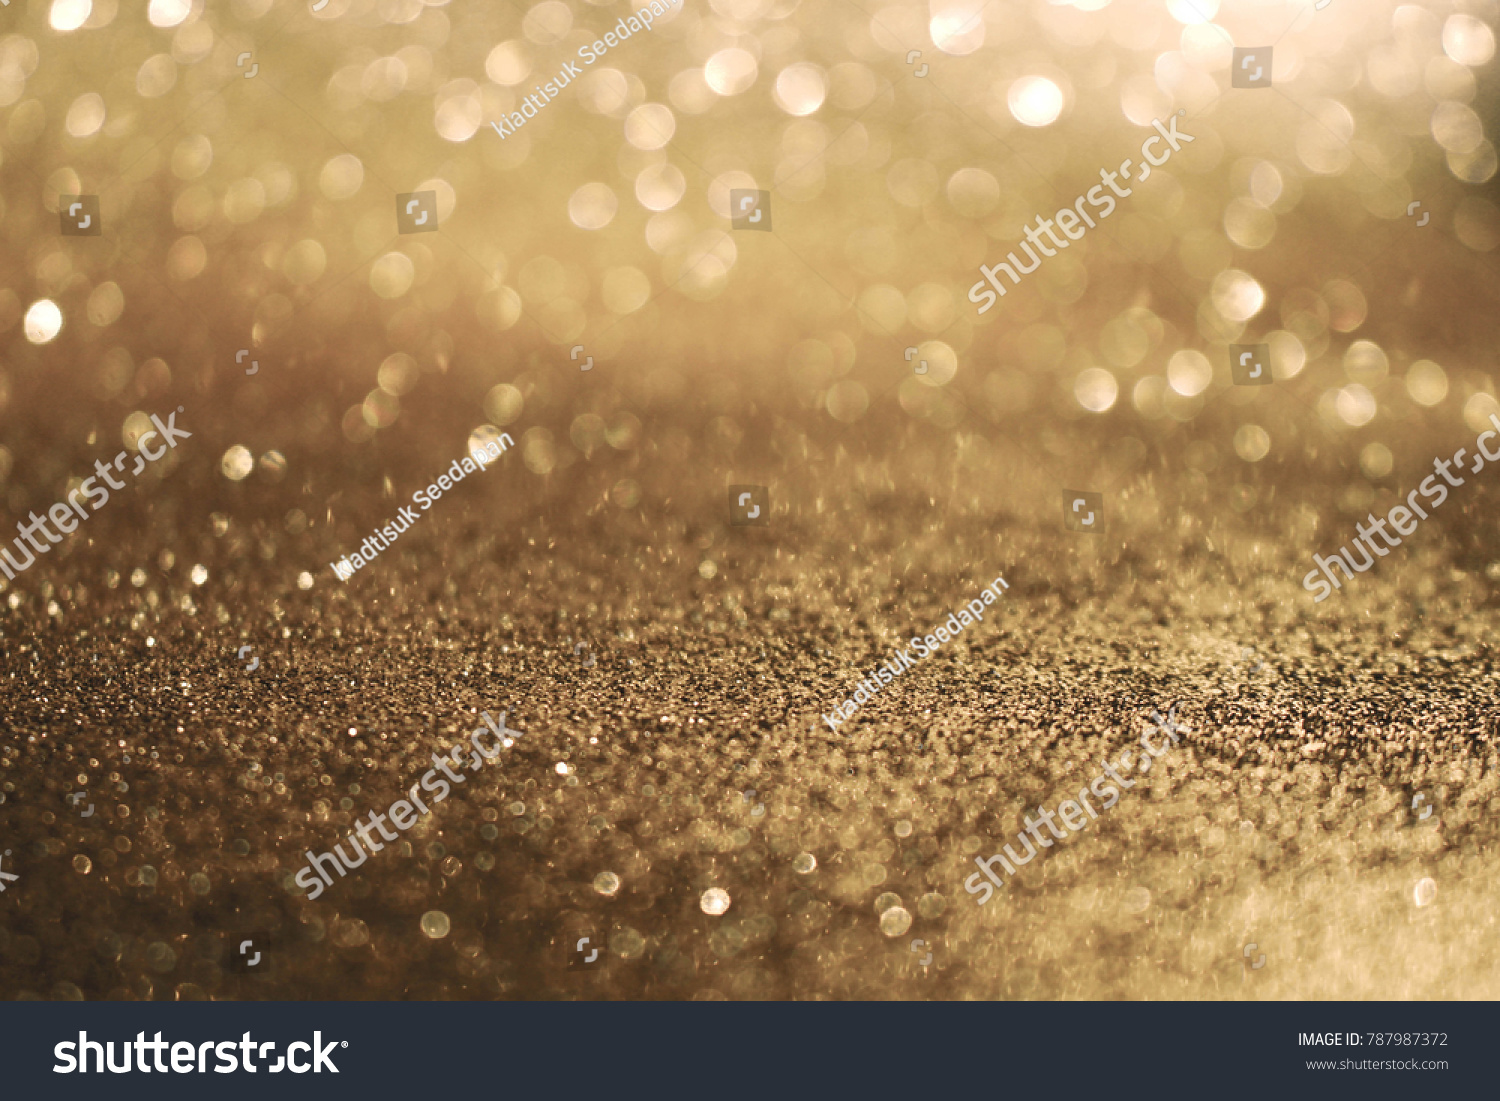 golden giltter texture christmas abstract background #787987372